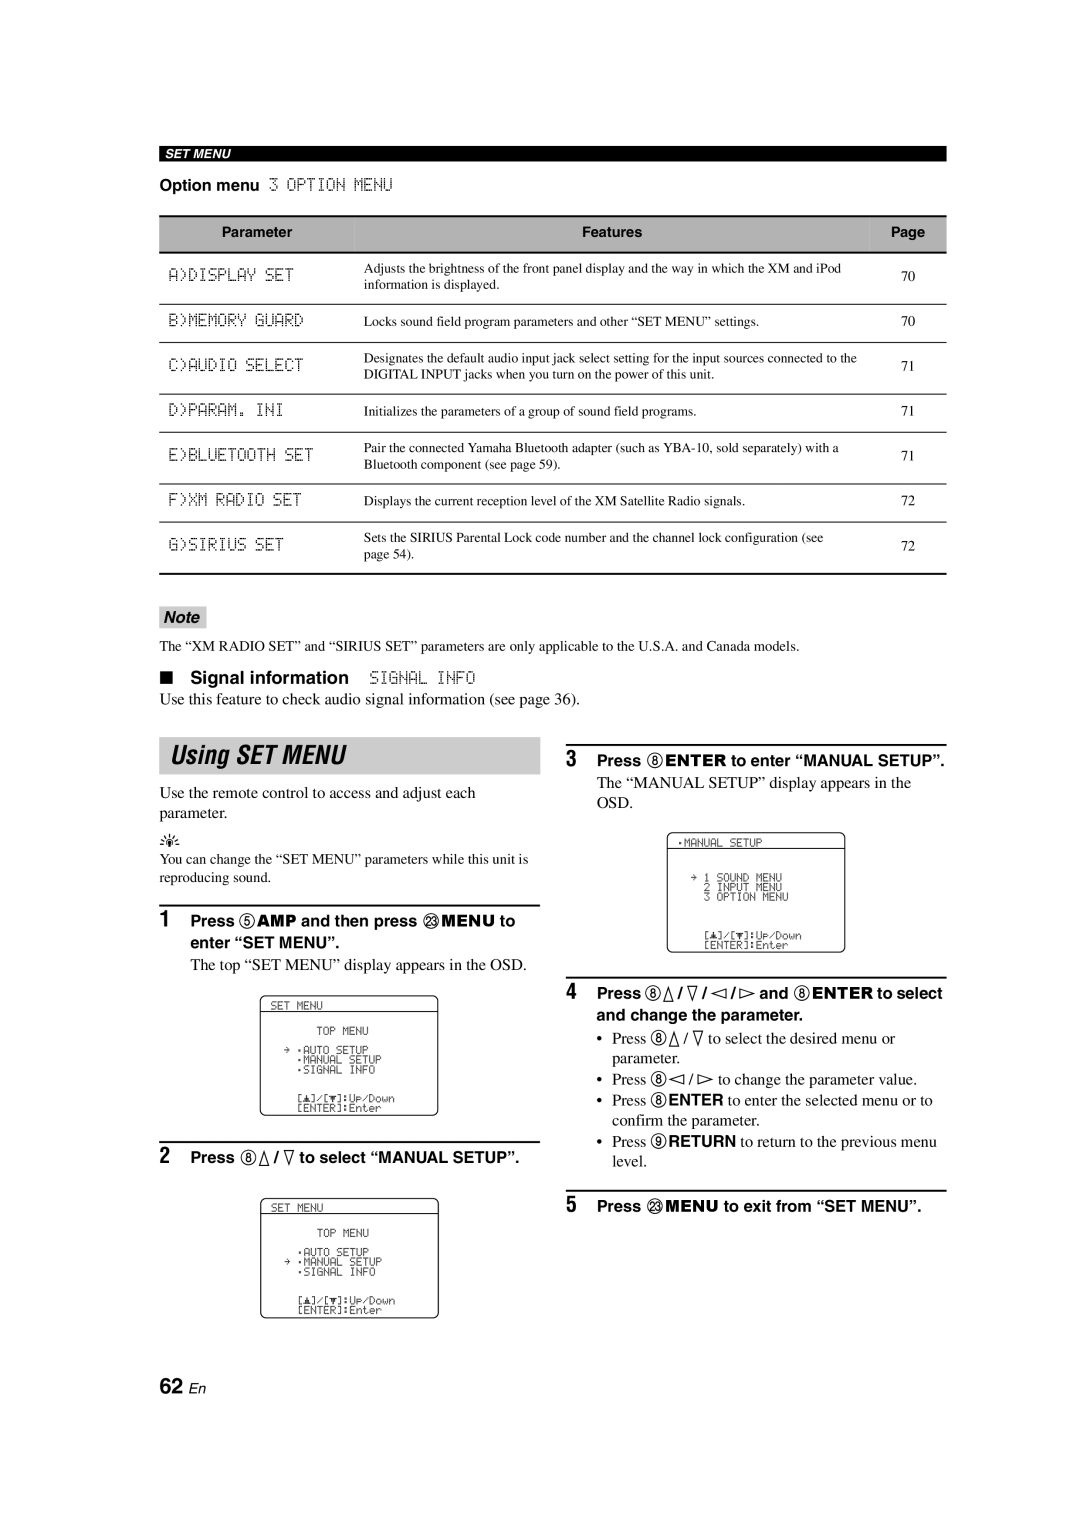 Yamaha RX-V463 owner manual Using SET MENU, 62 En, Signal information SIGNAL INFO 